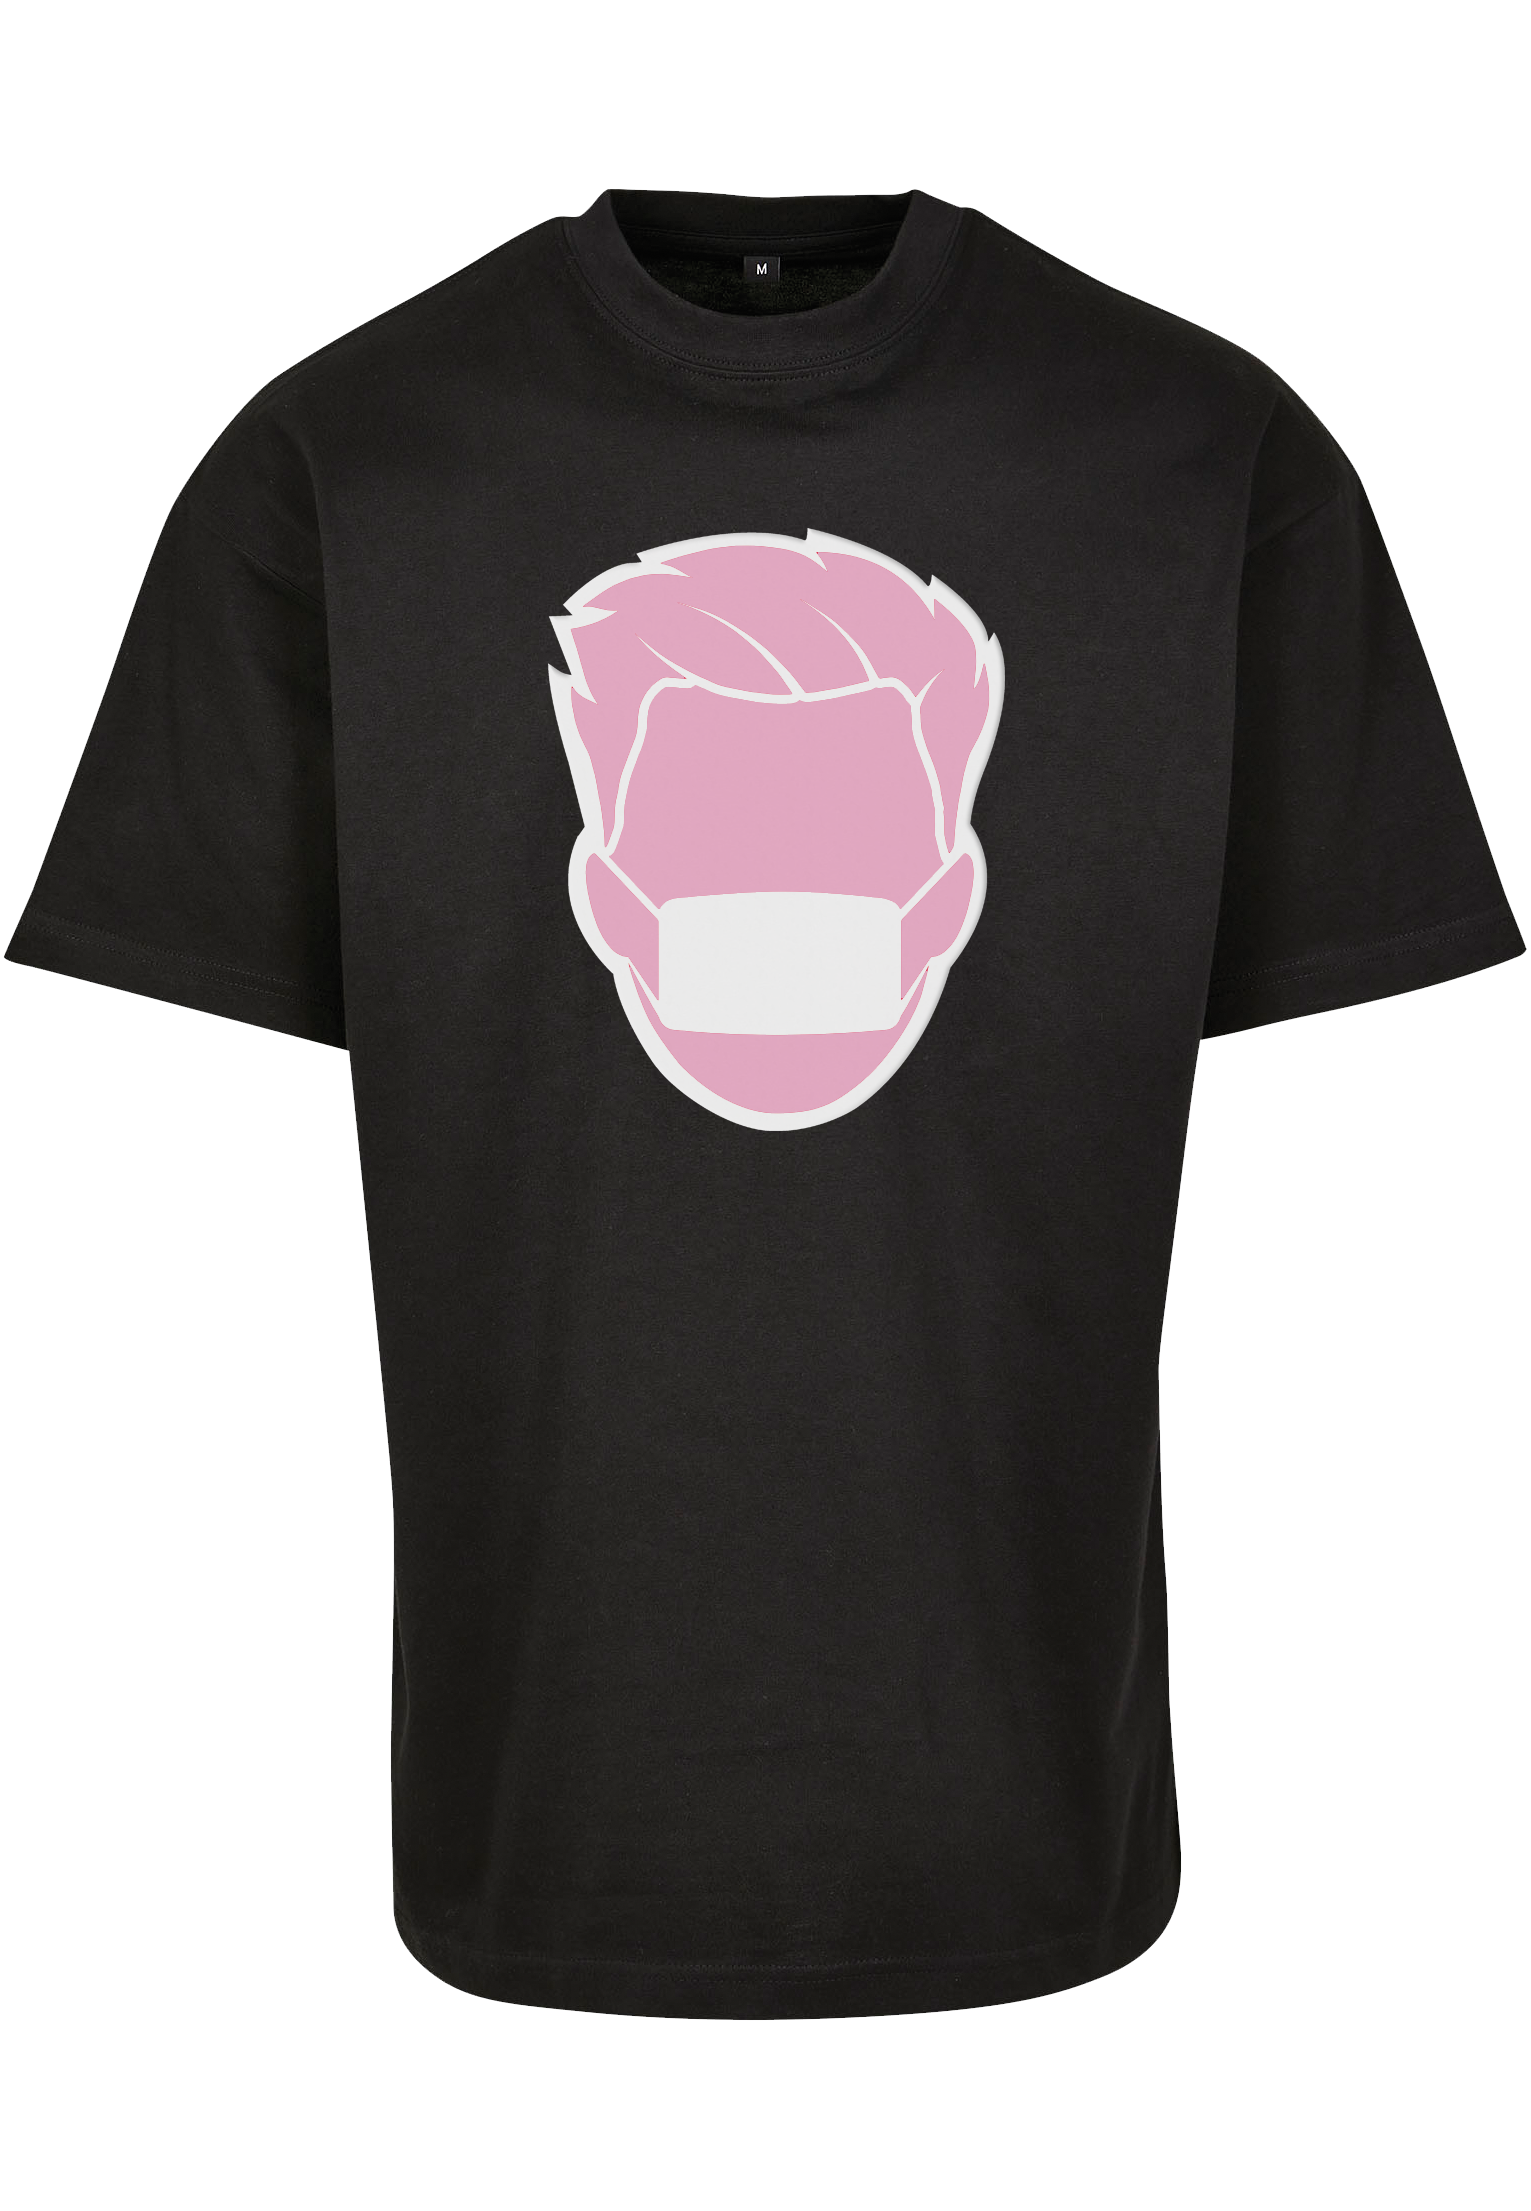 Pinkcar black T-Shirt